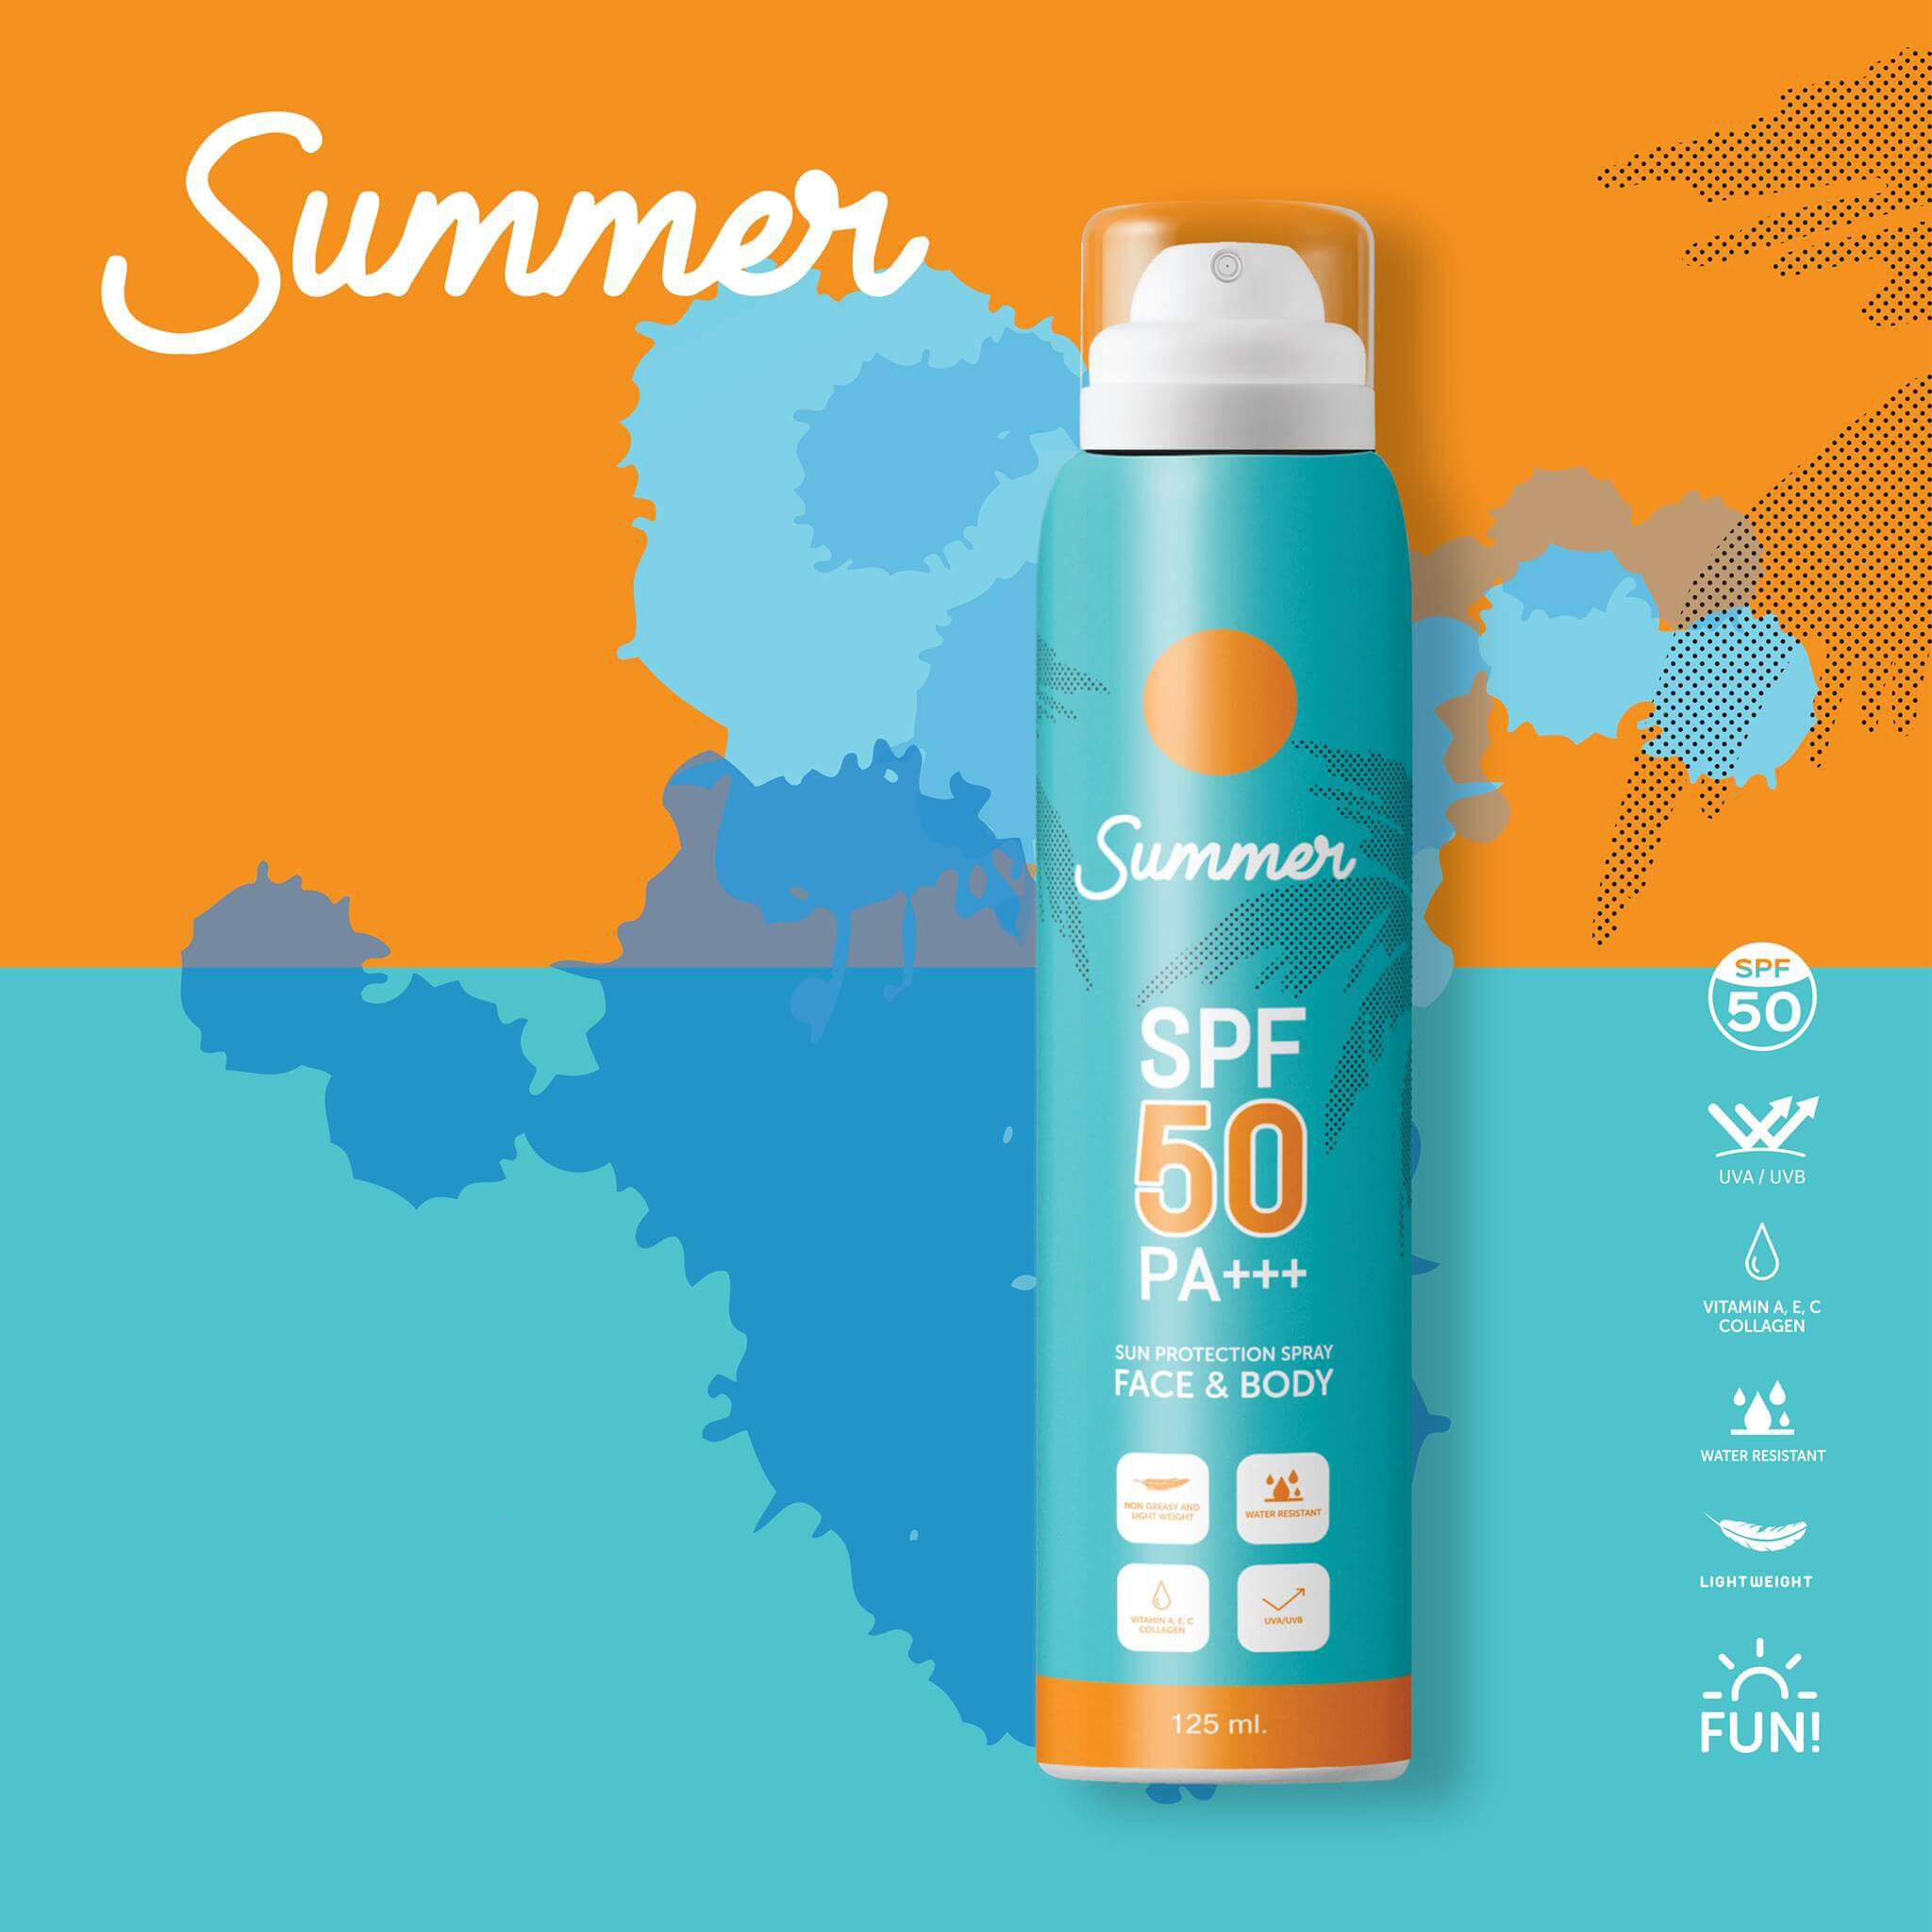 Summer Sun Protection Spray Face & Body SPF50 PA+++ 125 ml สเปรย์กันแดด ละอองบางเบา ใช้ง่ายไม่เหนียวเหนอะหนะ อ่อนโยนต่อผิว ให้ผิวสุขภาพดีชุ่มชื้น กันน้ำ กันเหงื่อ ไม่ทำร้ายธรรมชาติและประการัง